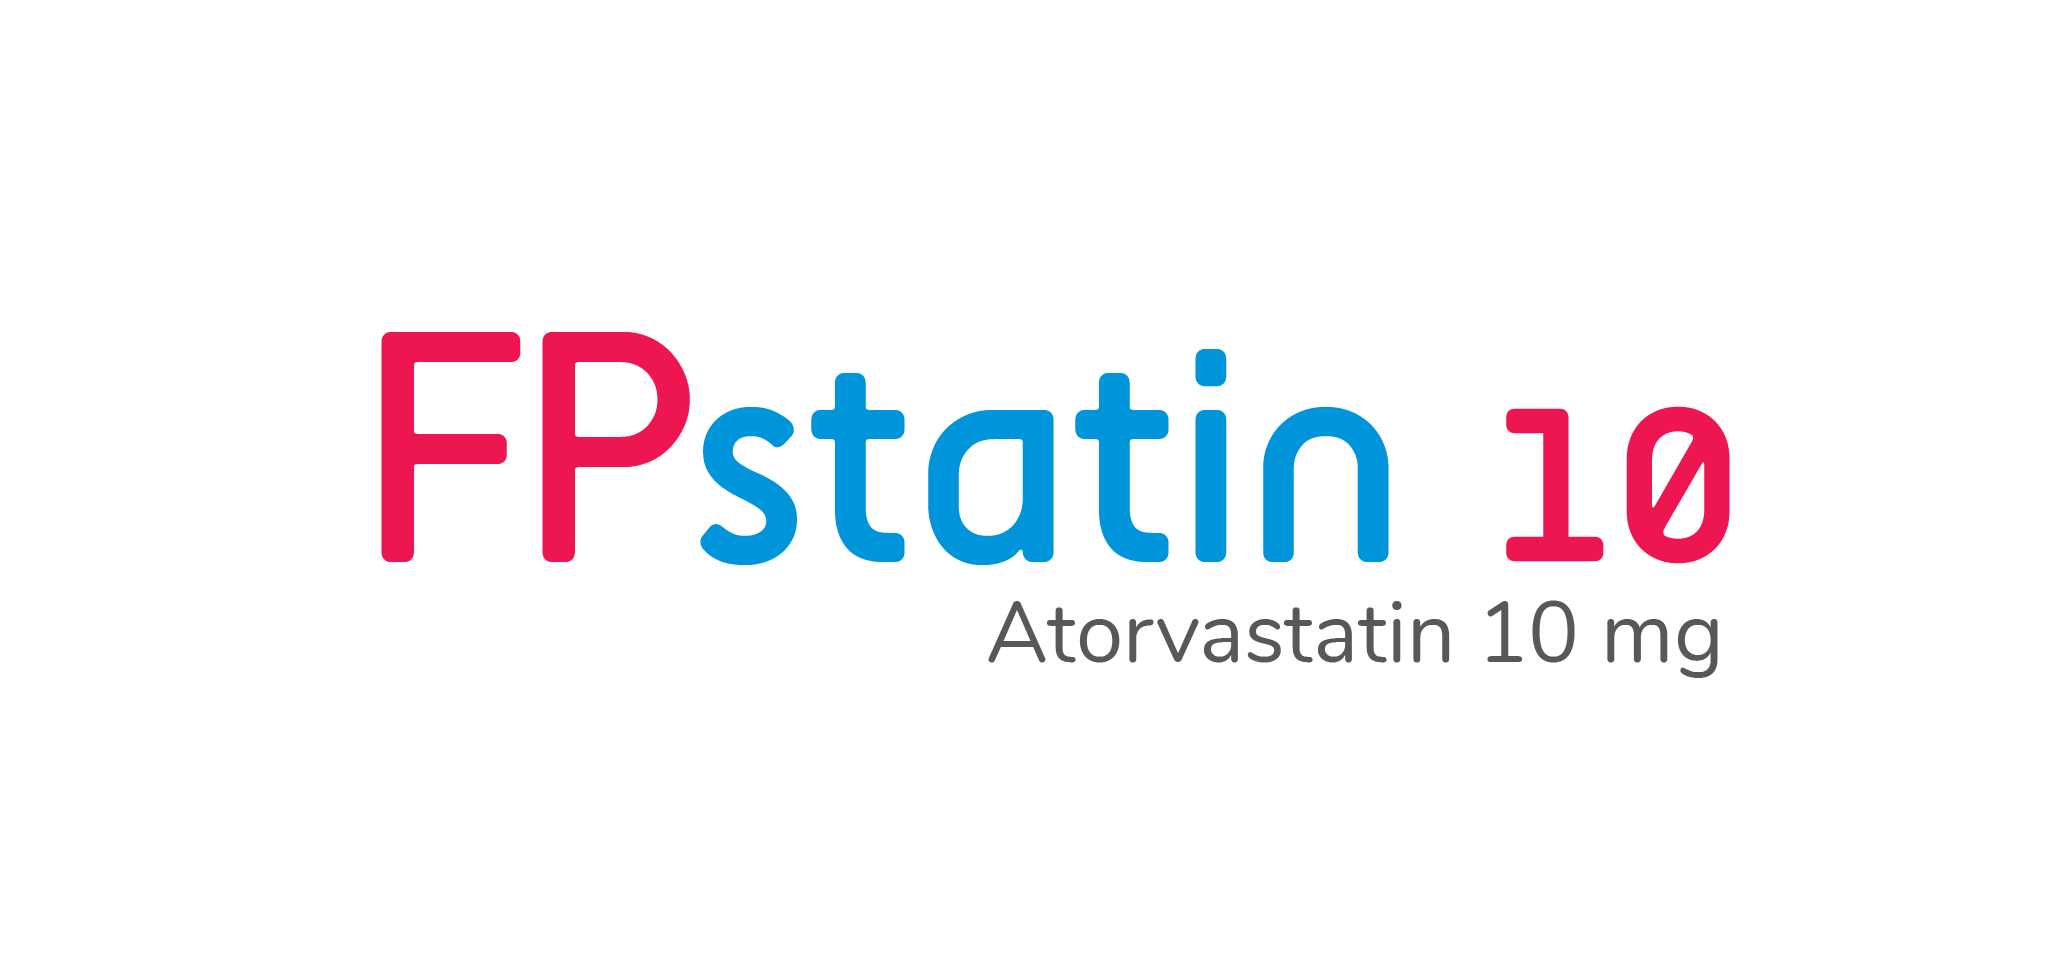 FP Statin 10 | Atorvastatin 10 mg